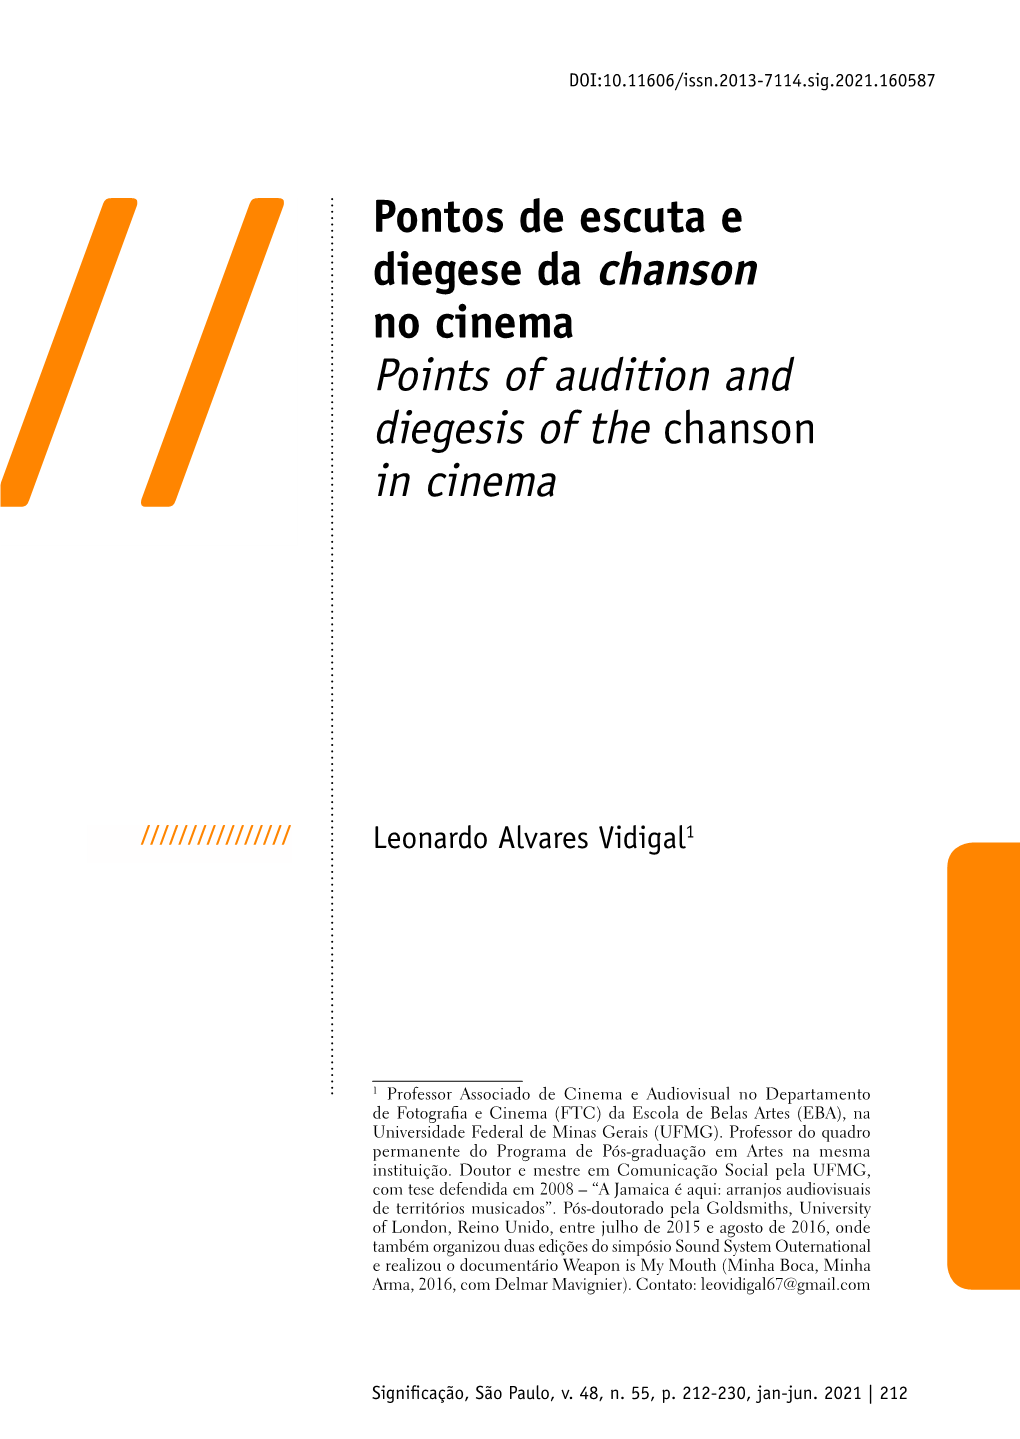 Pontos De Escuta E Diegese Da Chanson No Cinema Points of Audition and Diegesis of the Chanson // in Cinema